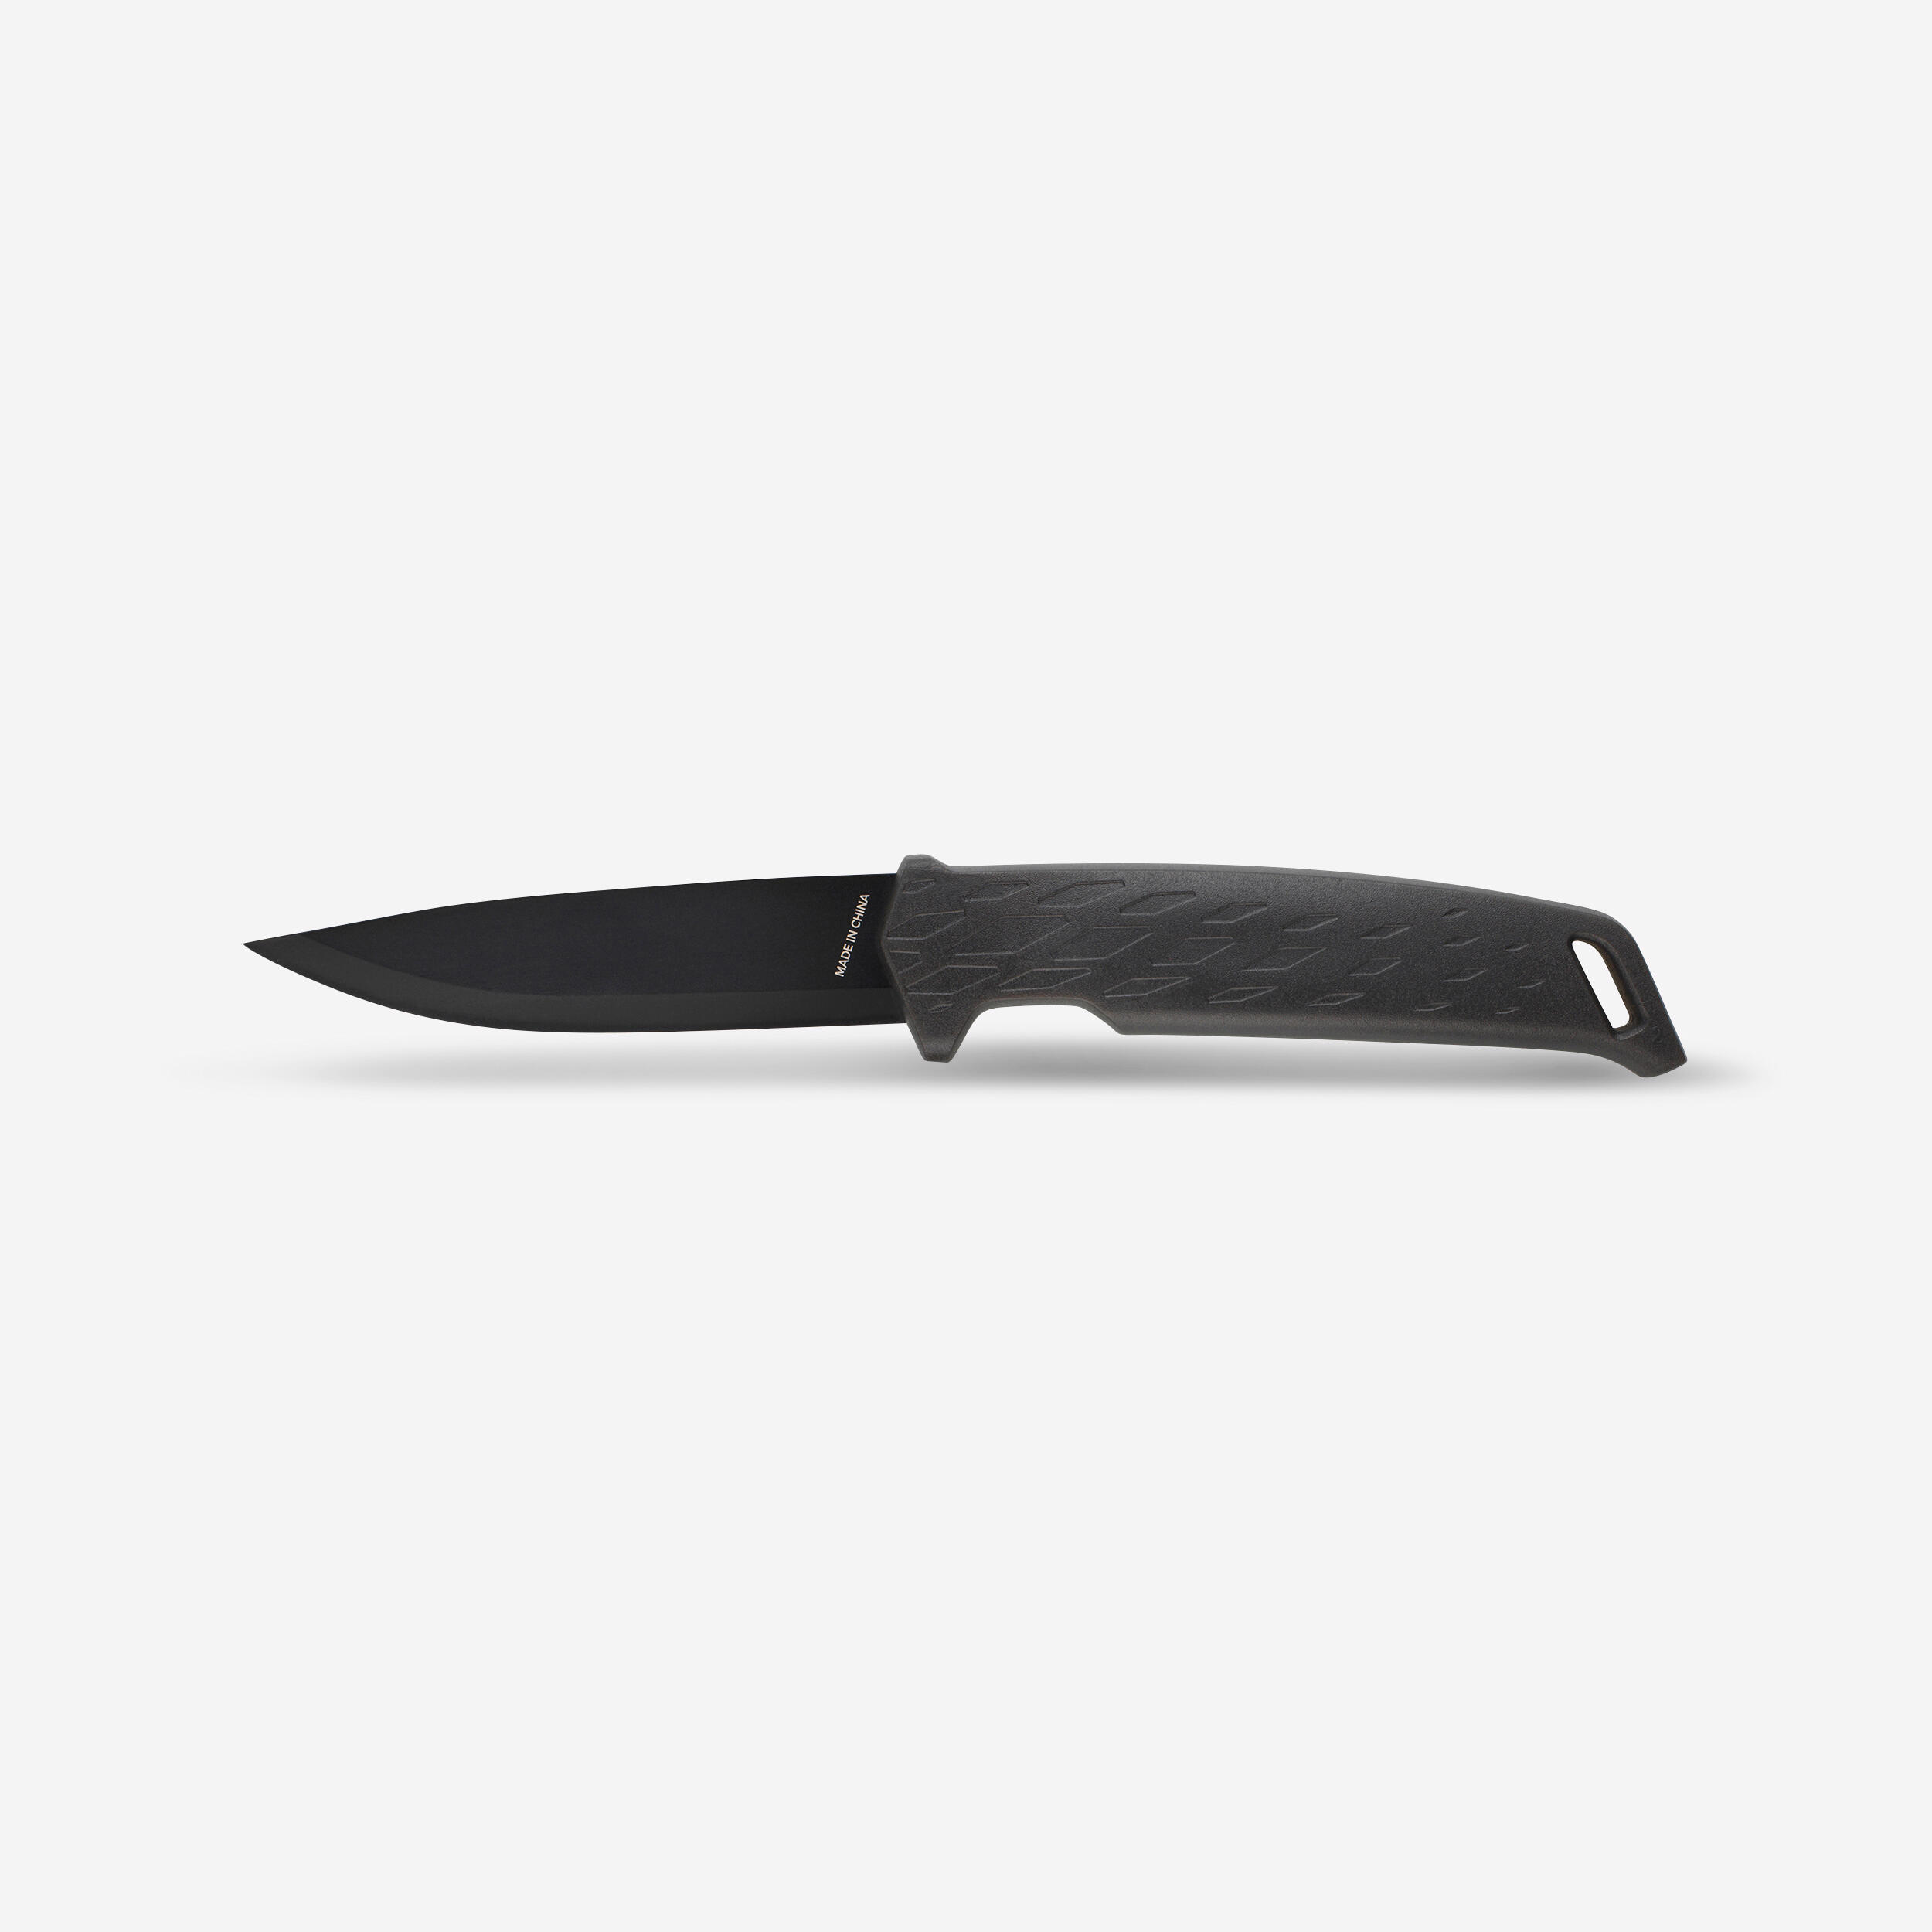 Sika 100 hunting knife